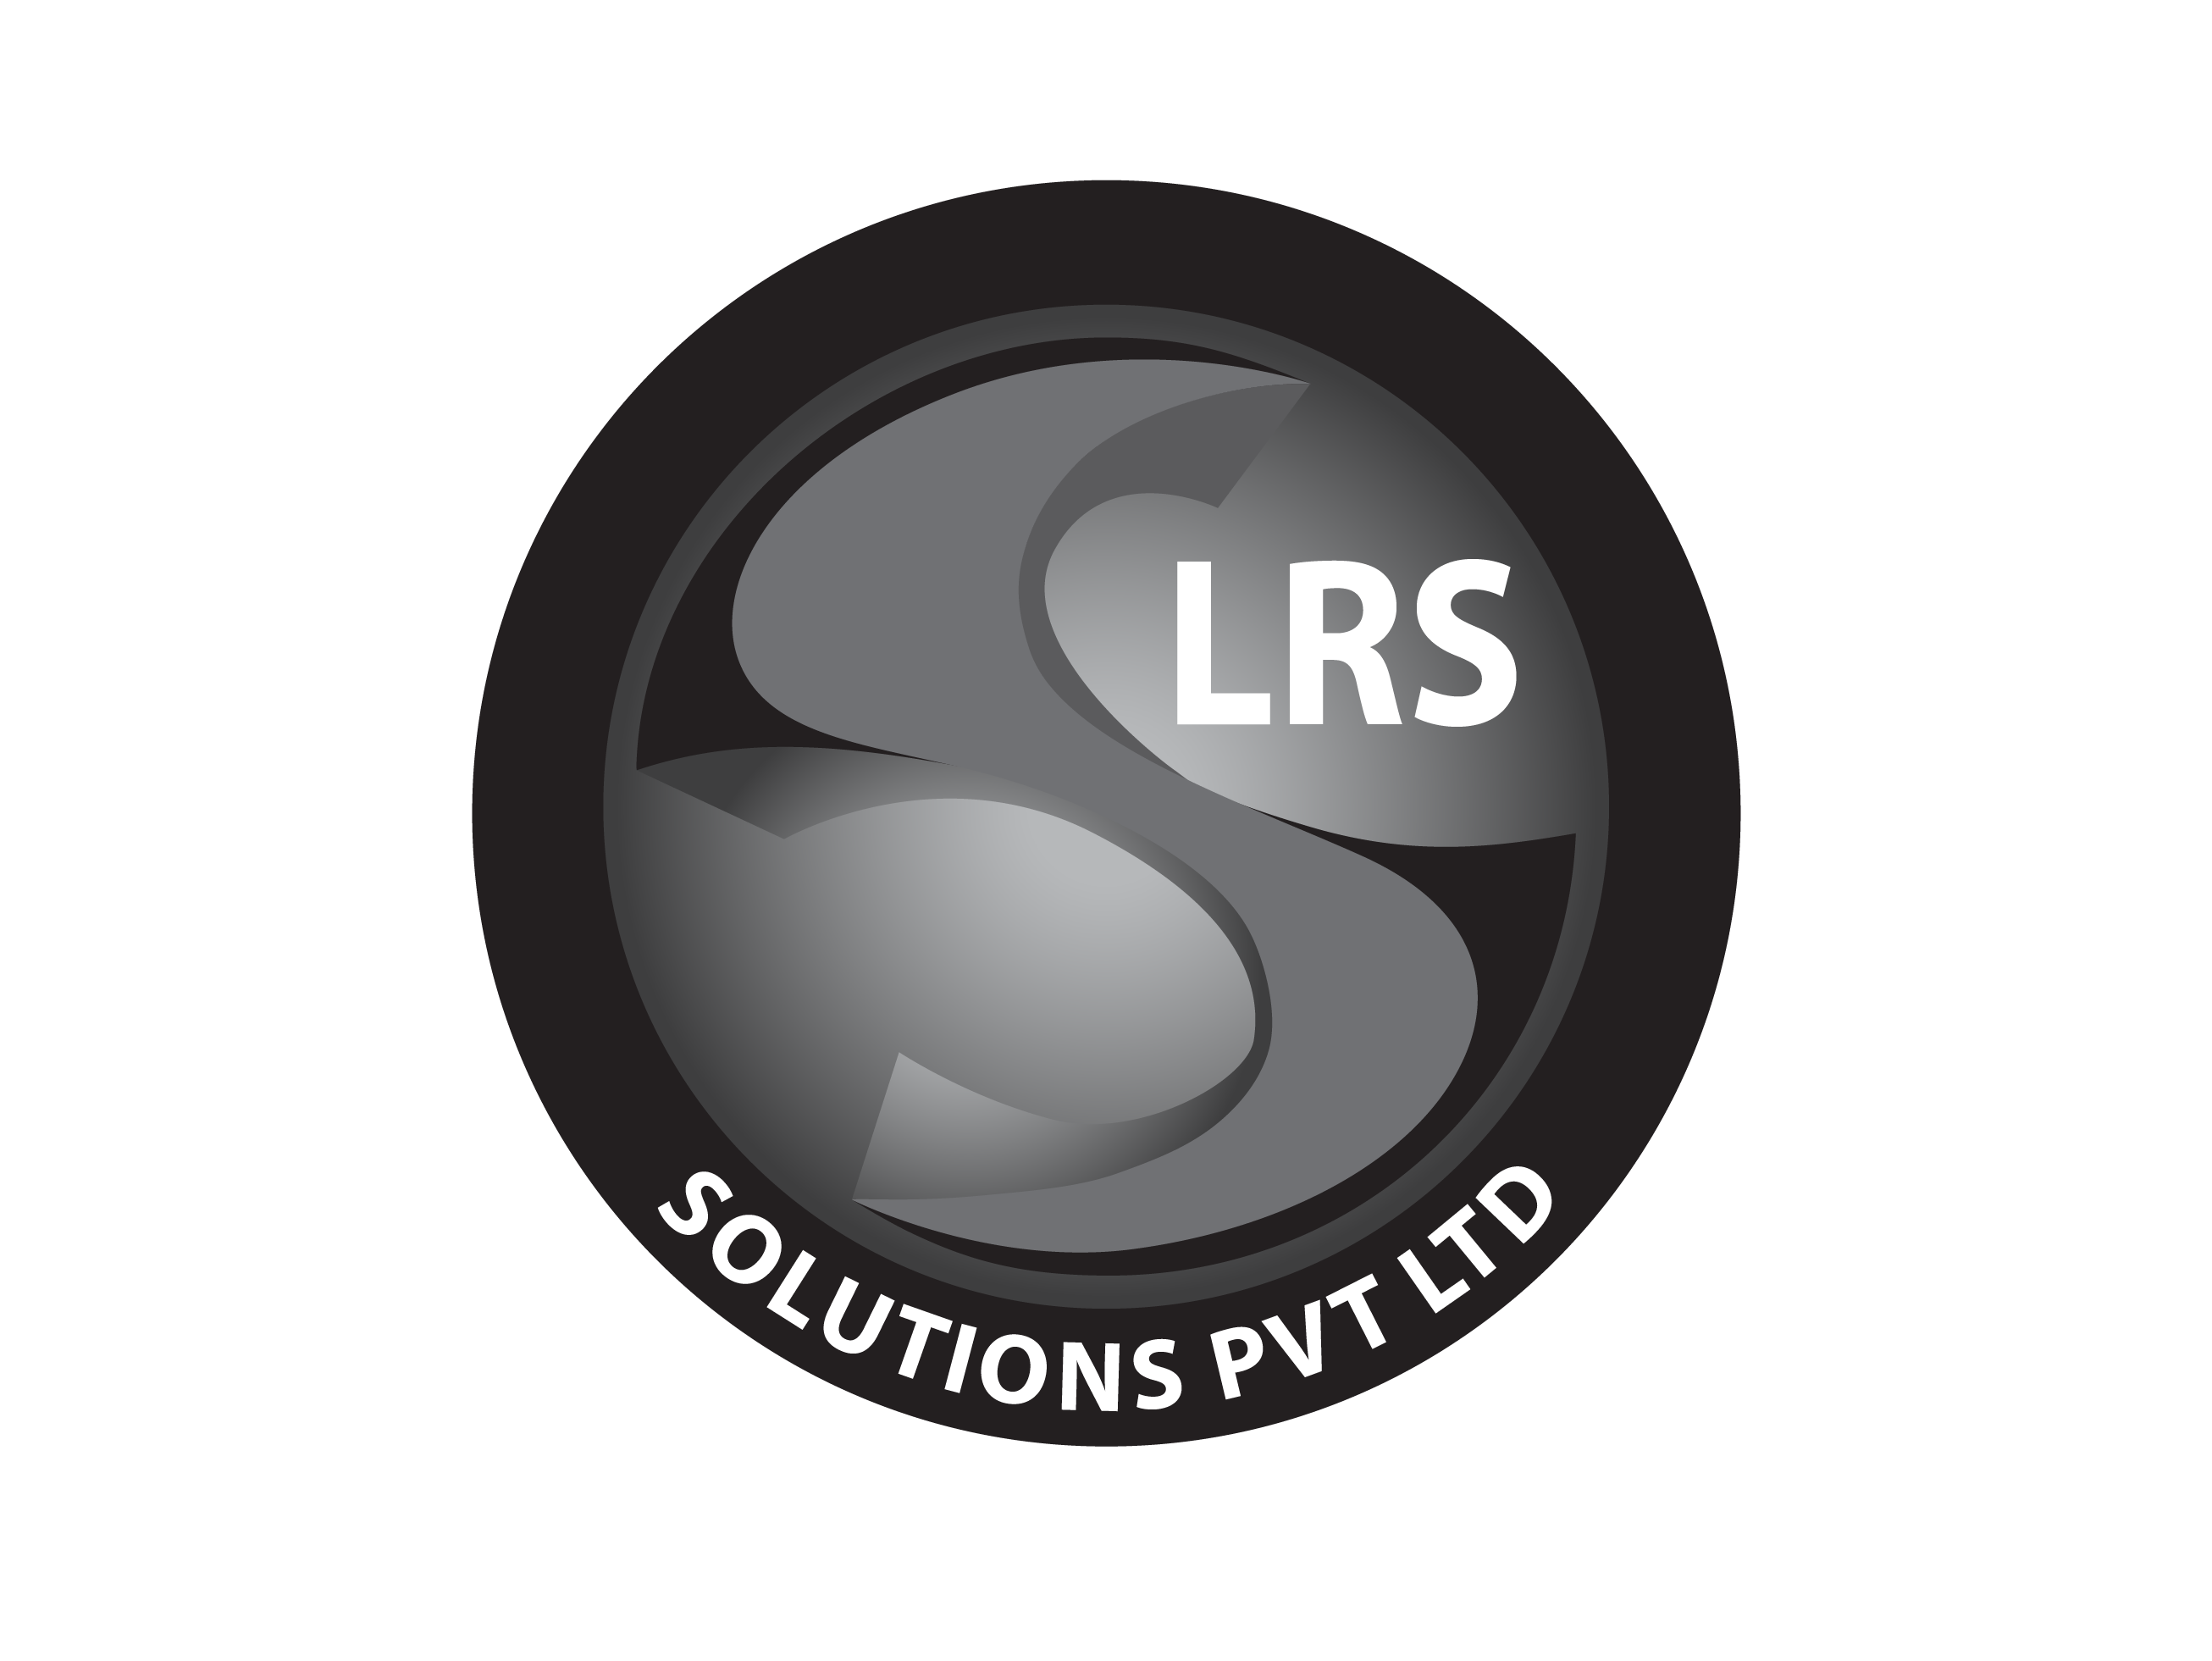 SLRS logo